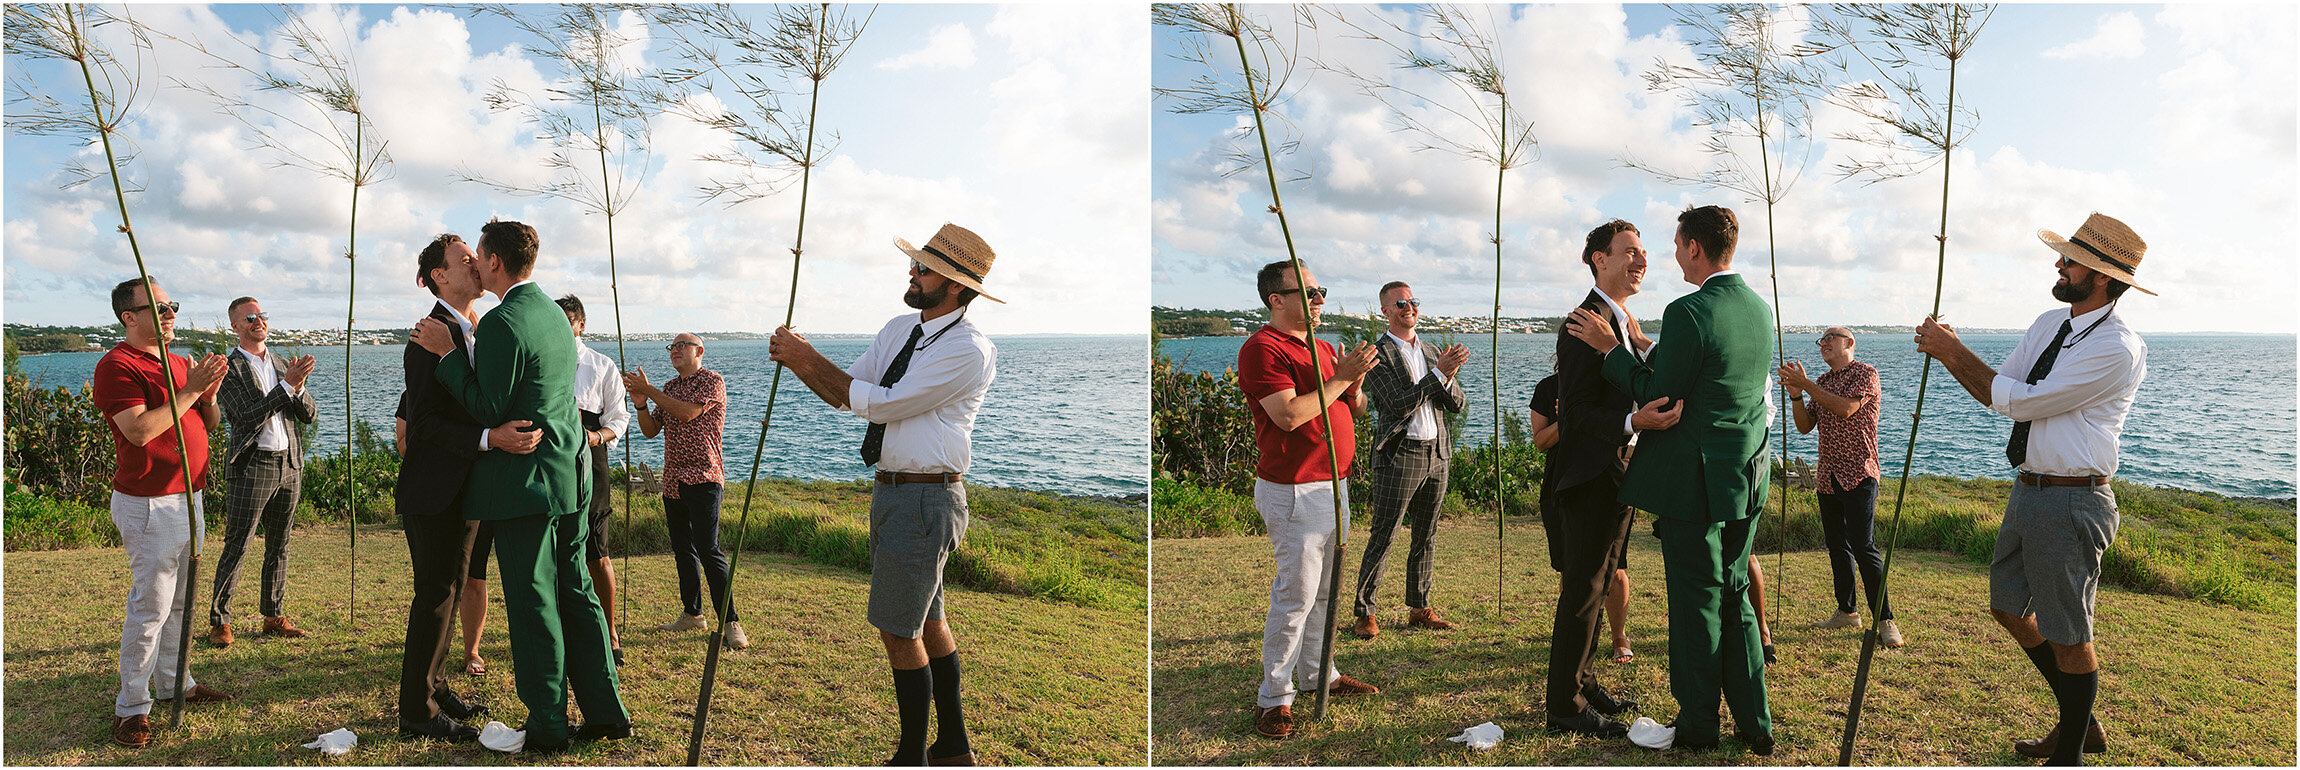 ©FianderFoto_Bermuda Same Sex Wedding Photographer_W&J_048.jpg